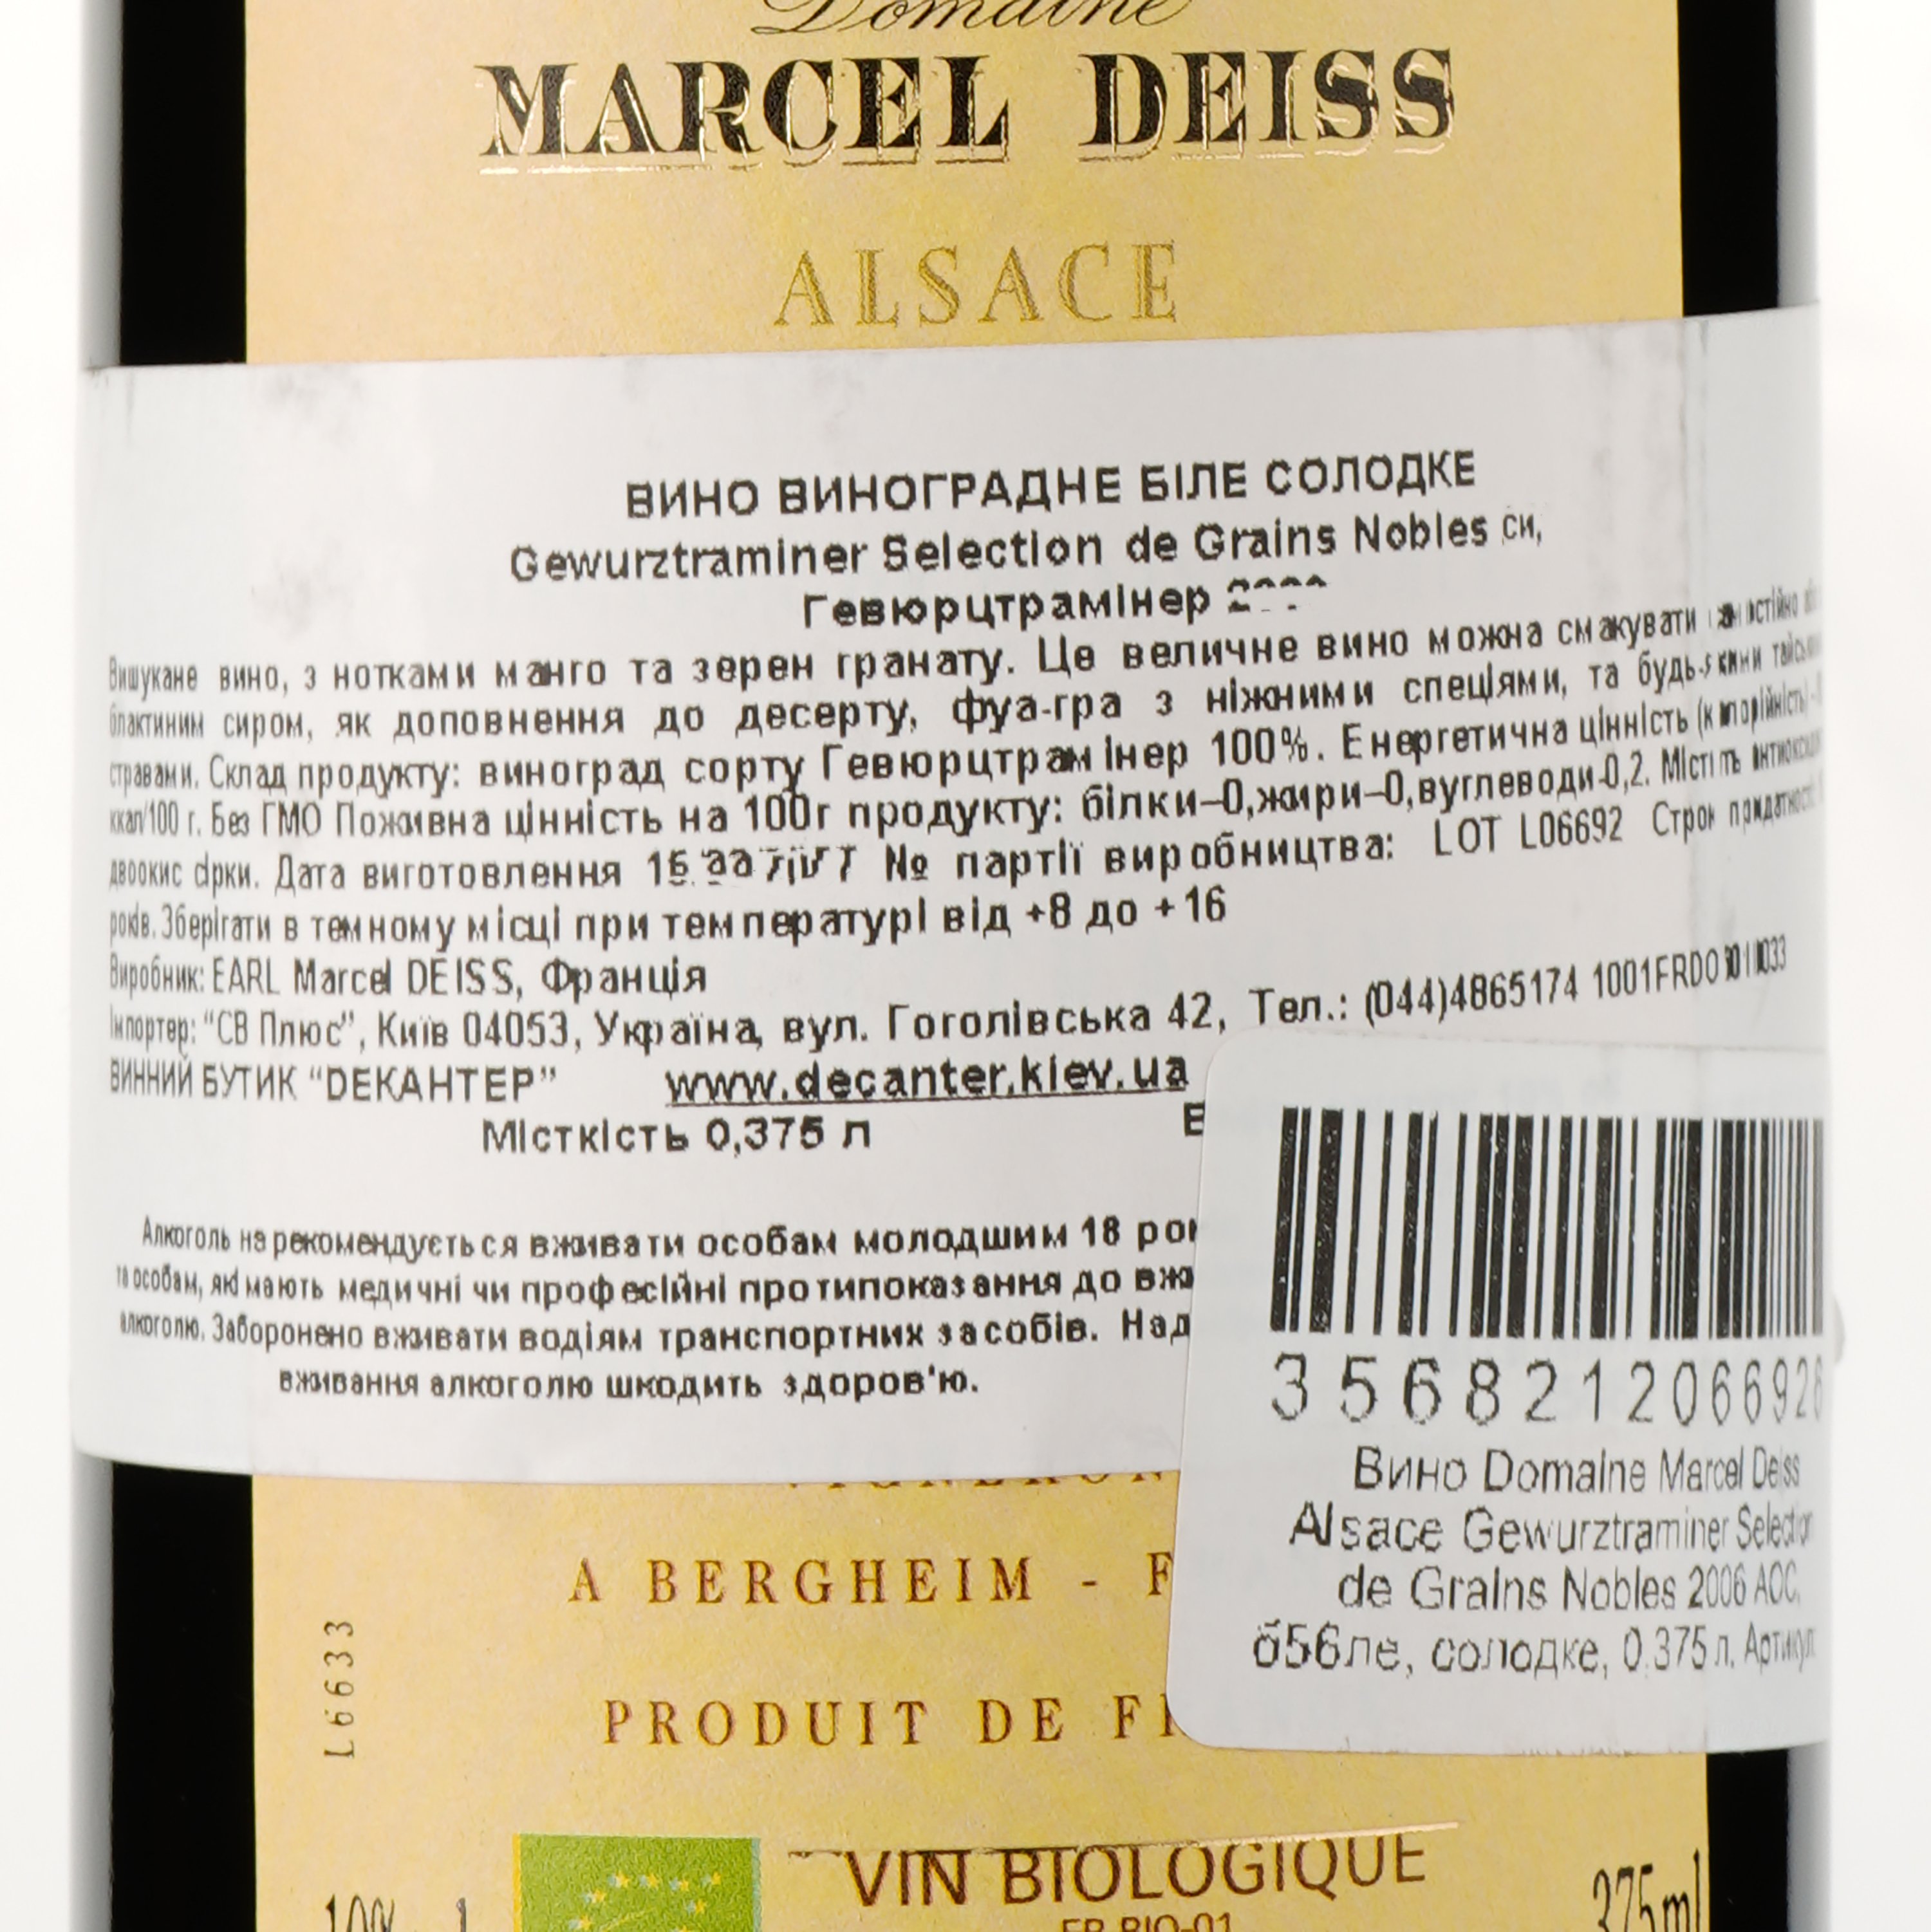 Вино Domaine Marcel Deiss Alsace Gewurztraminer Selection de Grains Nobles 2006 AOC, біле, солодке, 0,375 л - фото 3